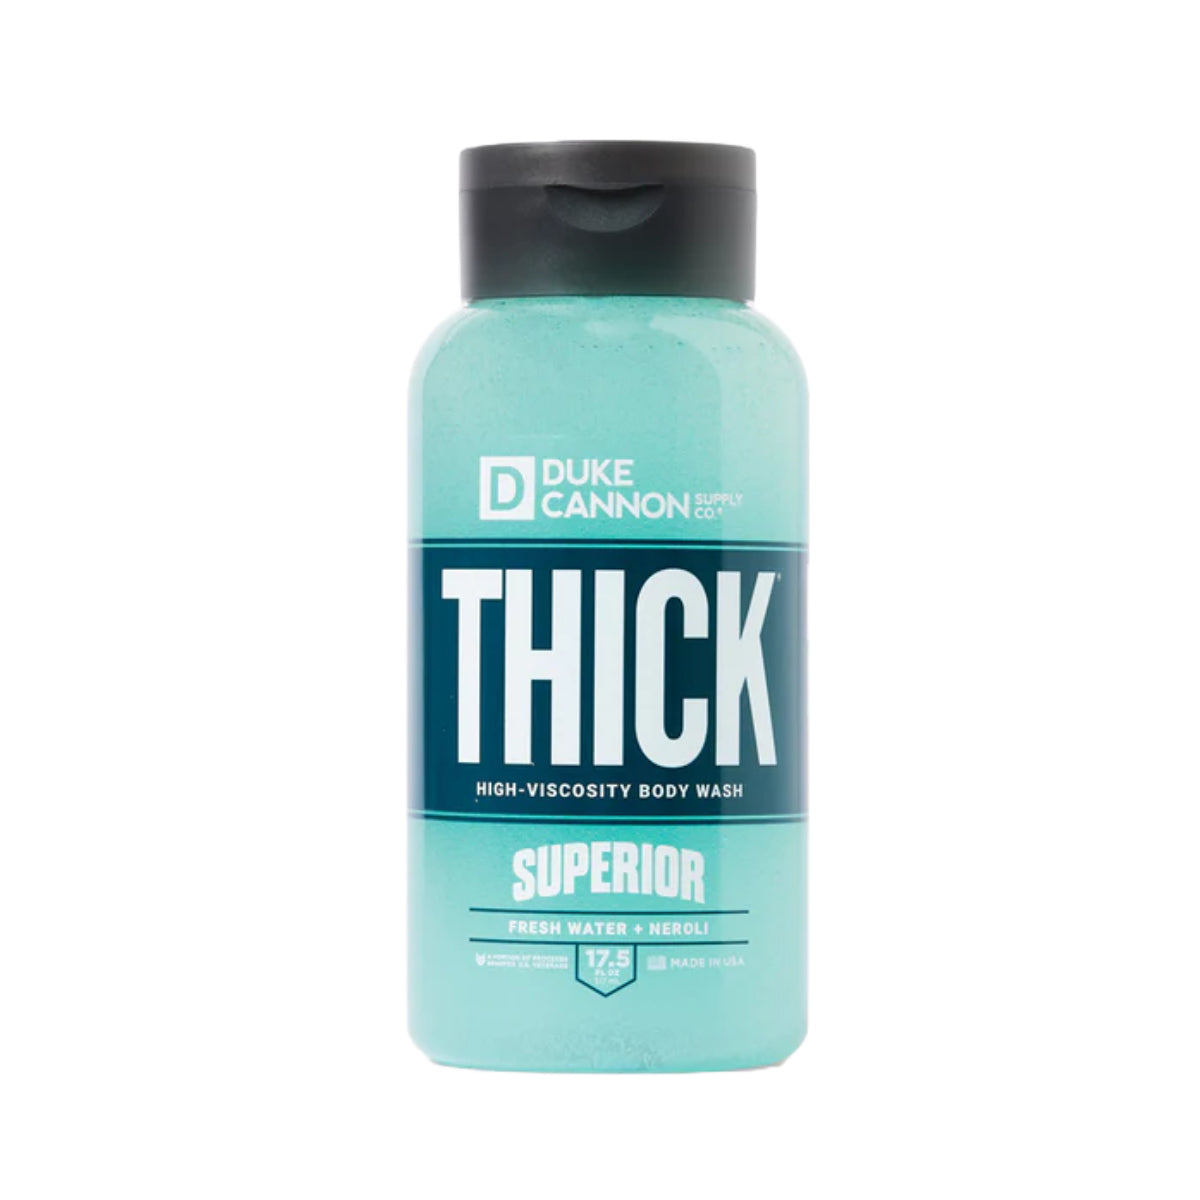 Thick High-Viscosity Body Wash | Superior